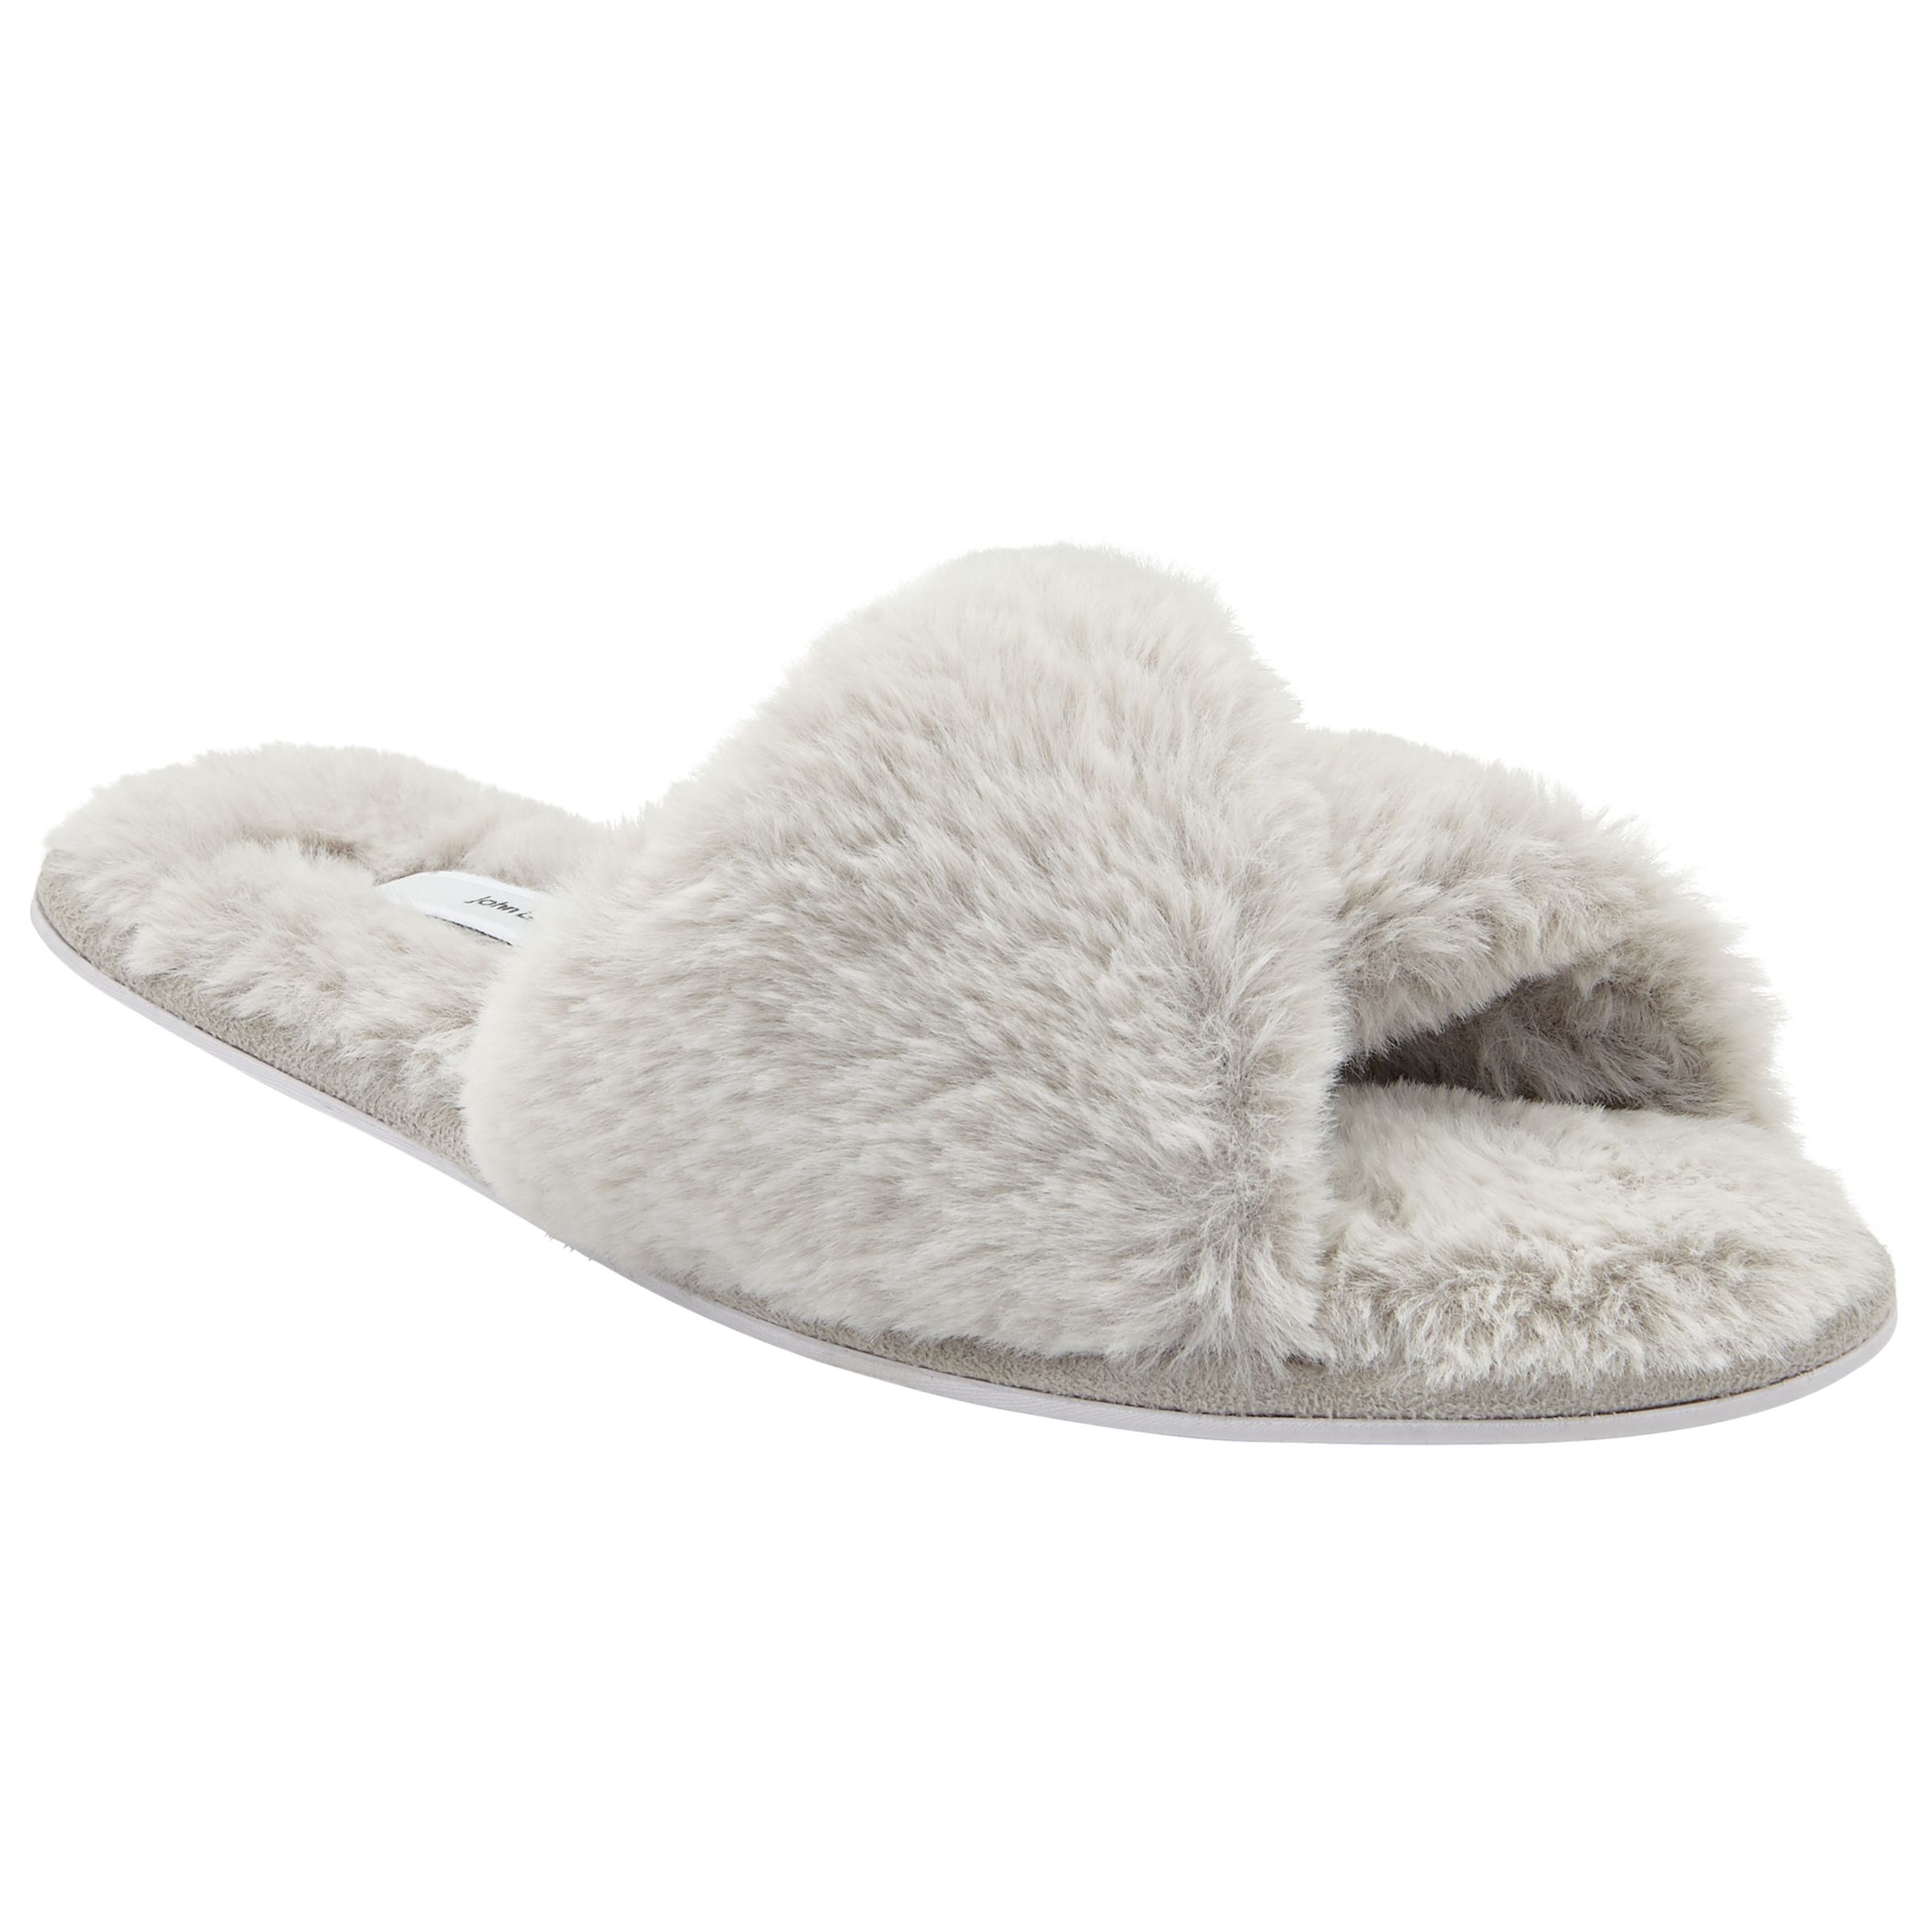 John Lewis & Partners Criss Cross Faux Fur Slider Slippers, Soft Grey, 3-4